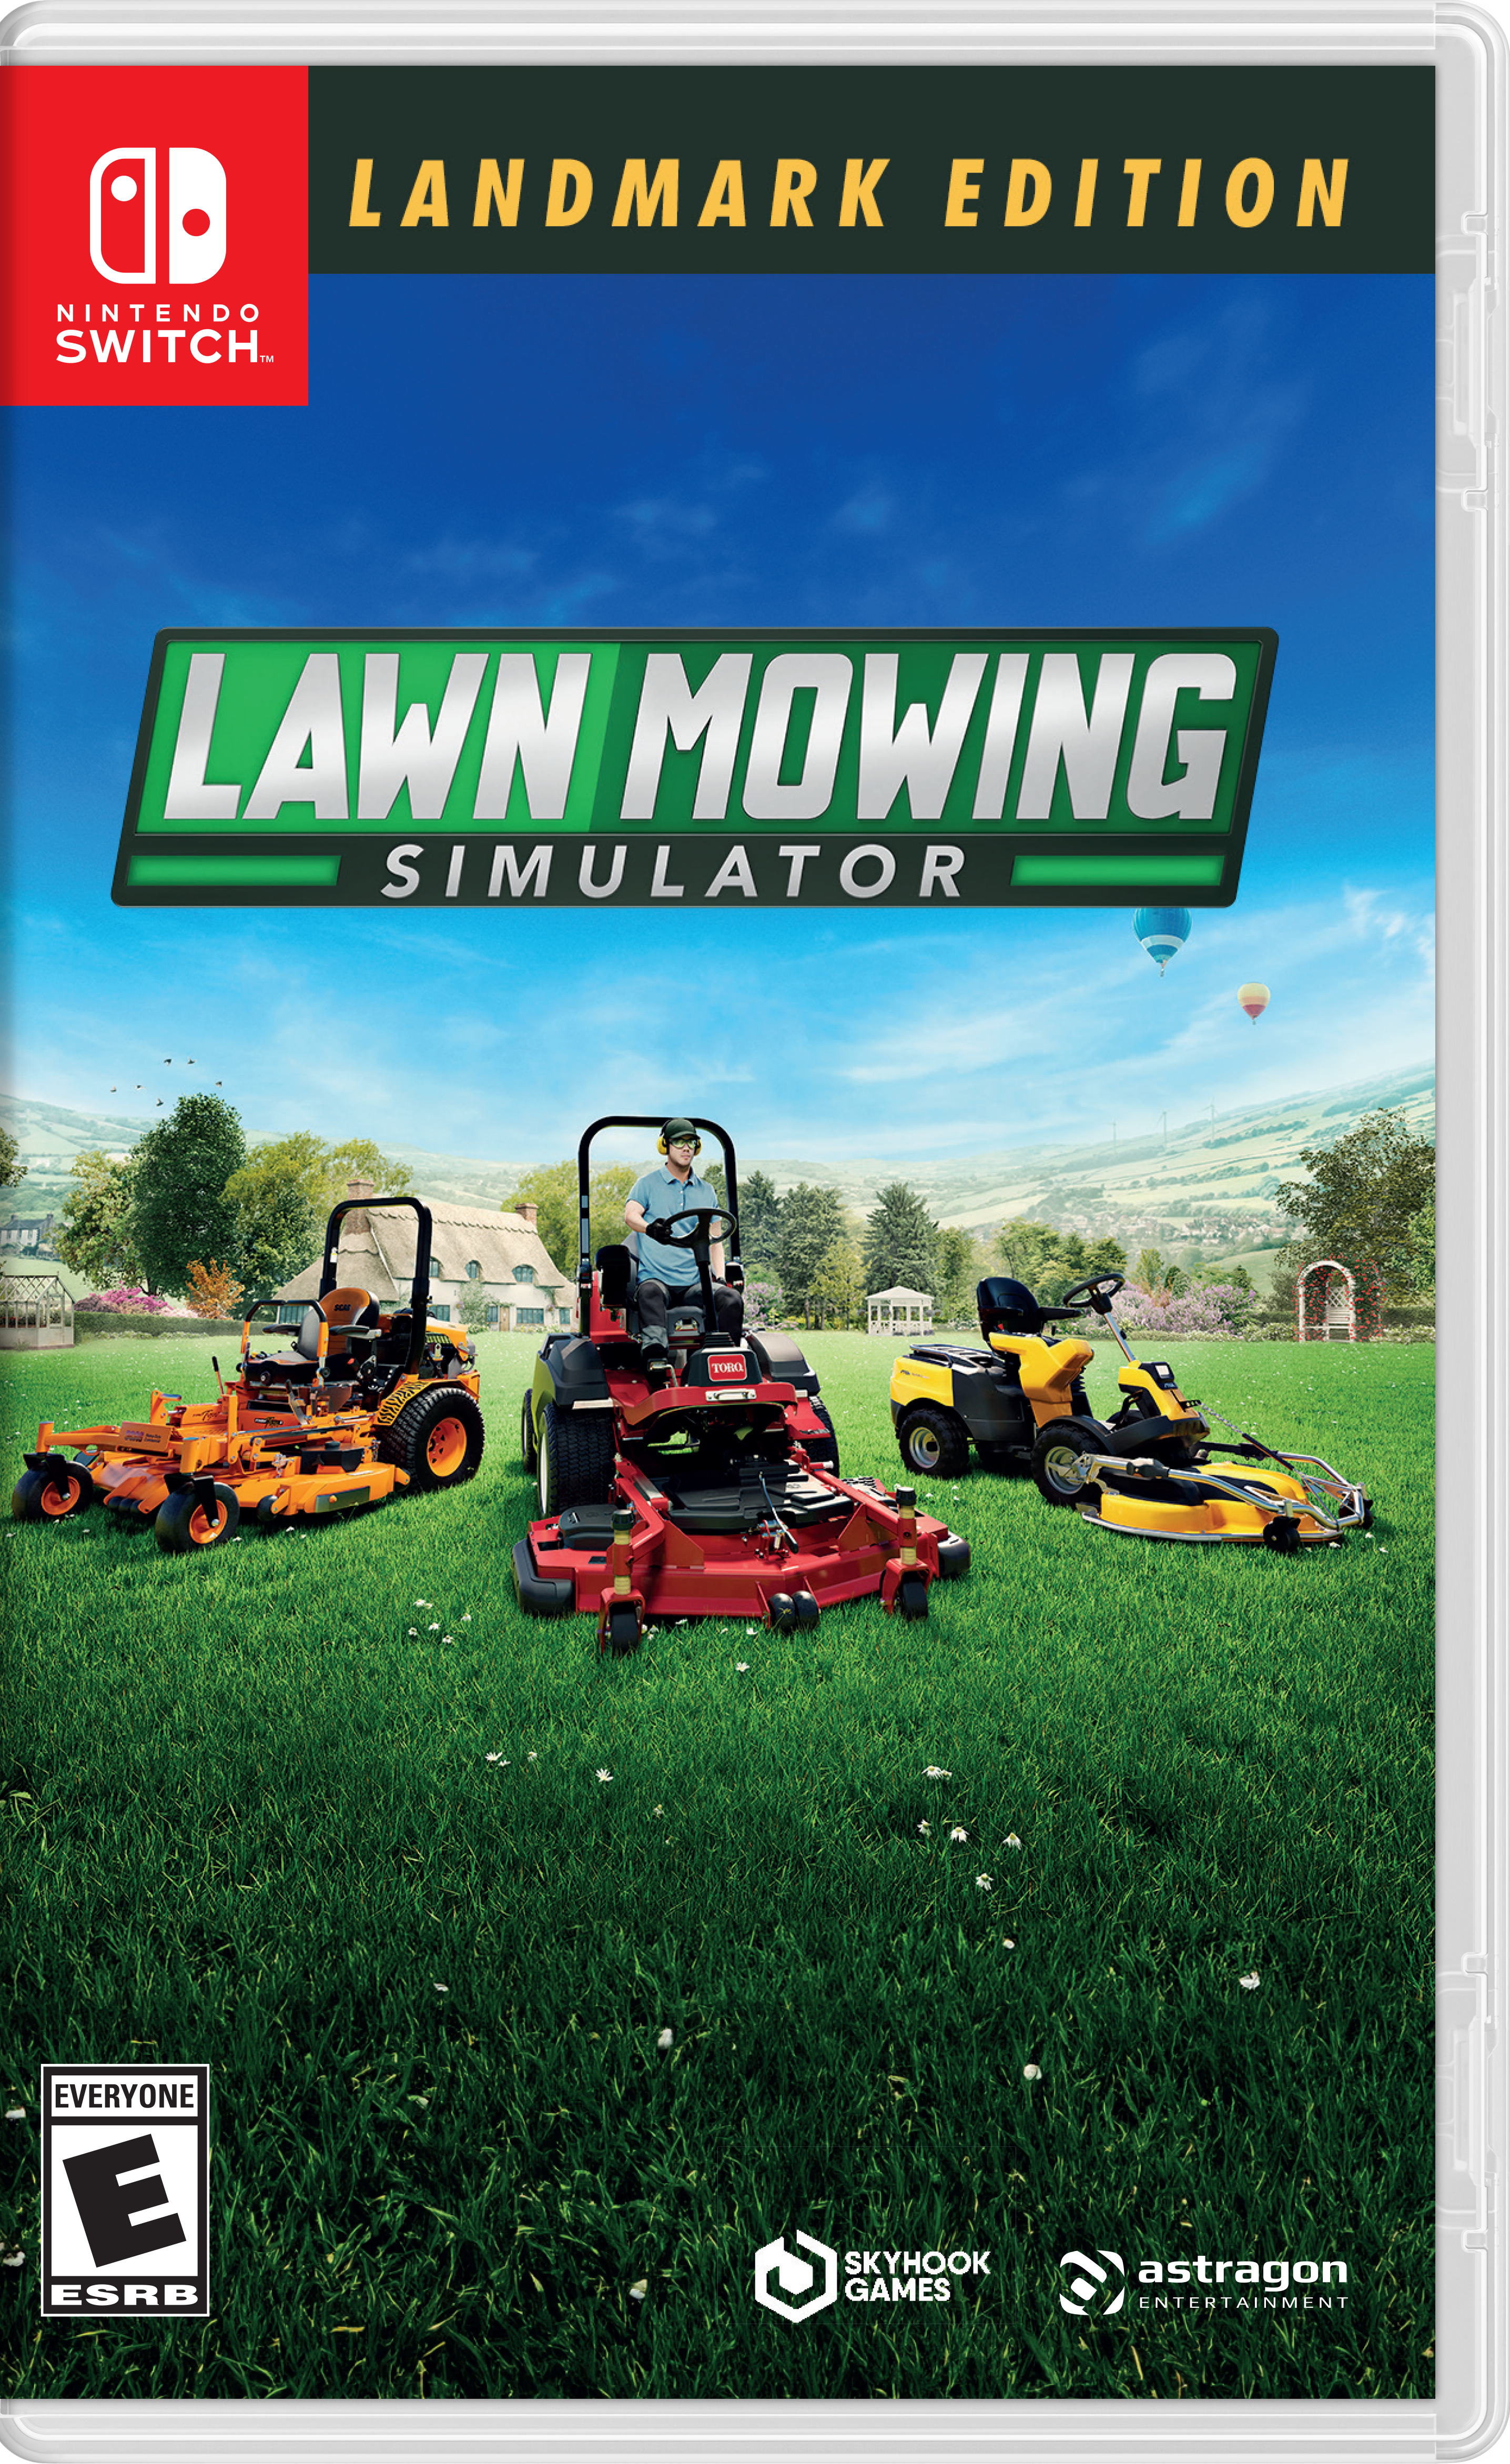 Lawn Mowing Simulator Landmark Edition - Nintendo Switch